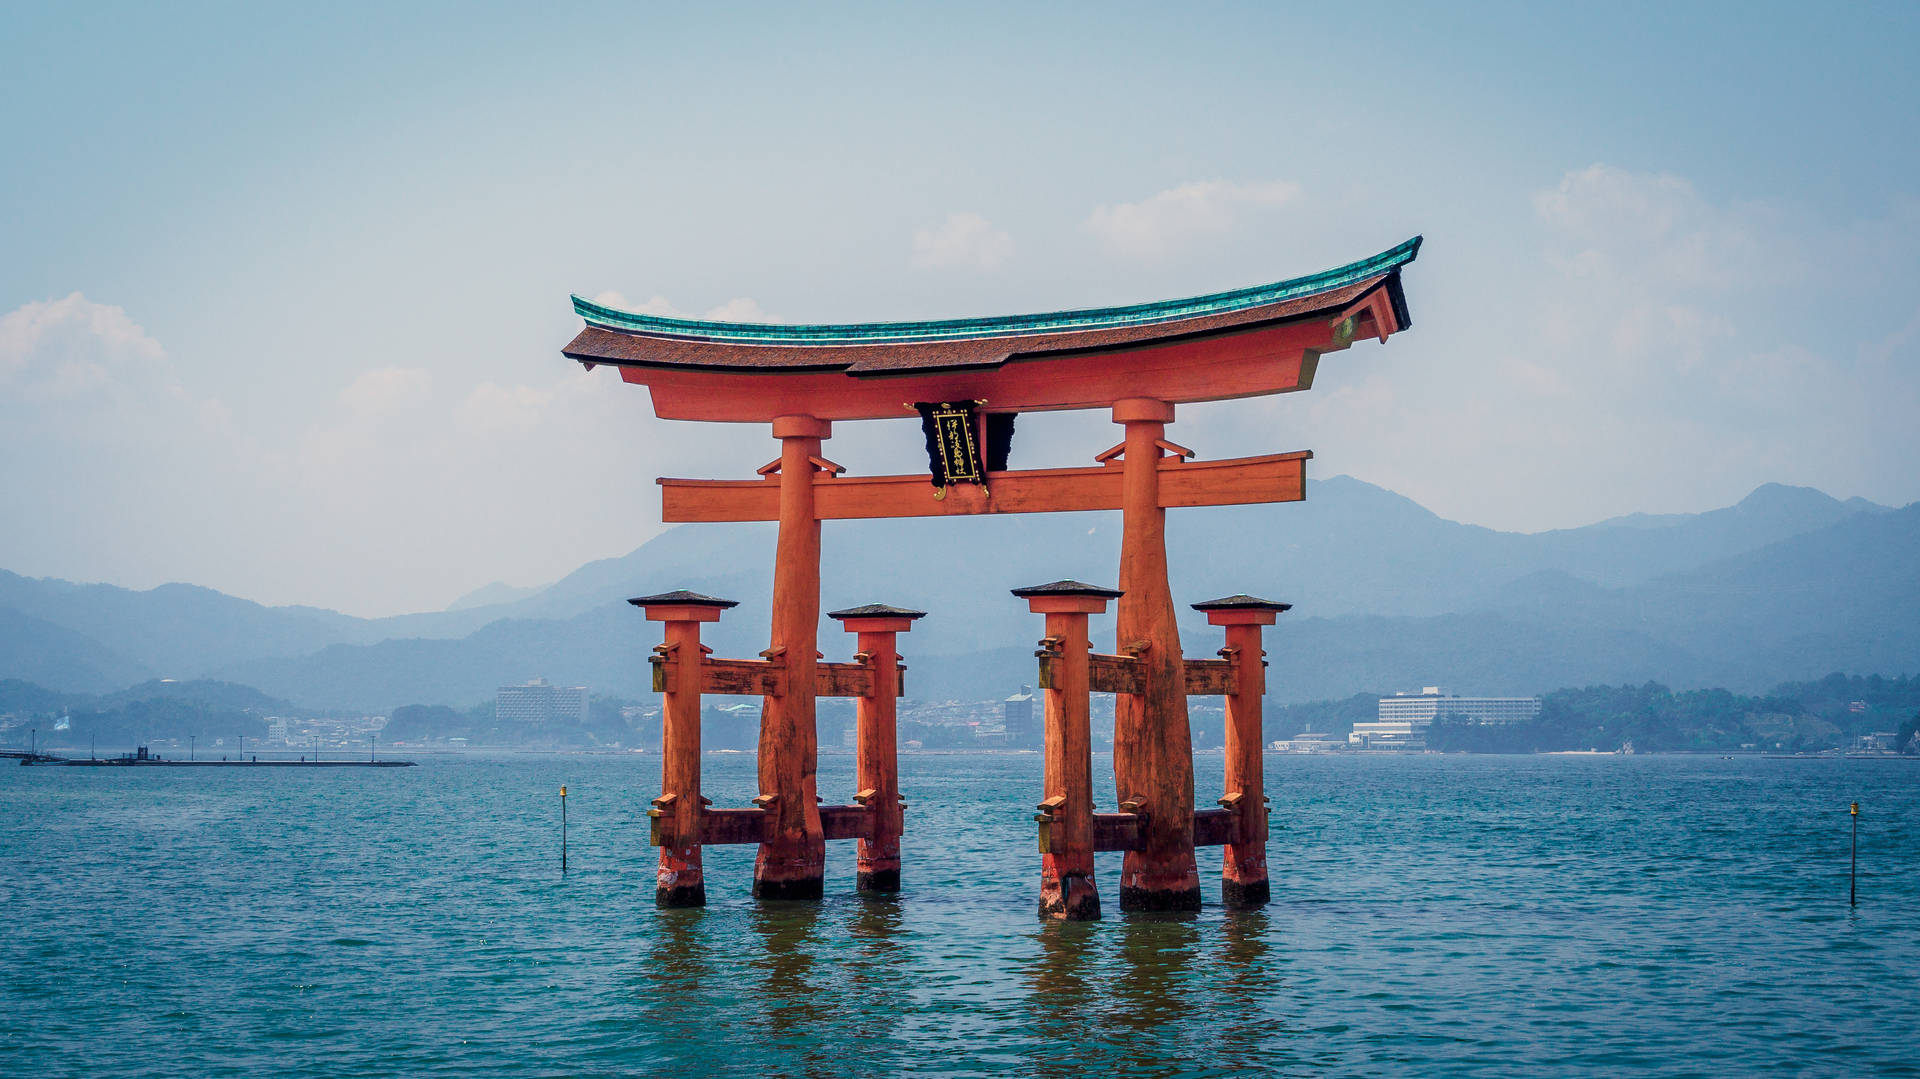 The Traditional Japanese Floating Torii Gate In Miyajima Island, Japan